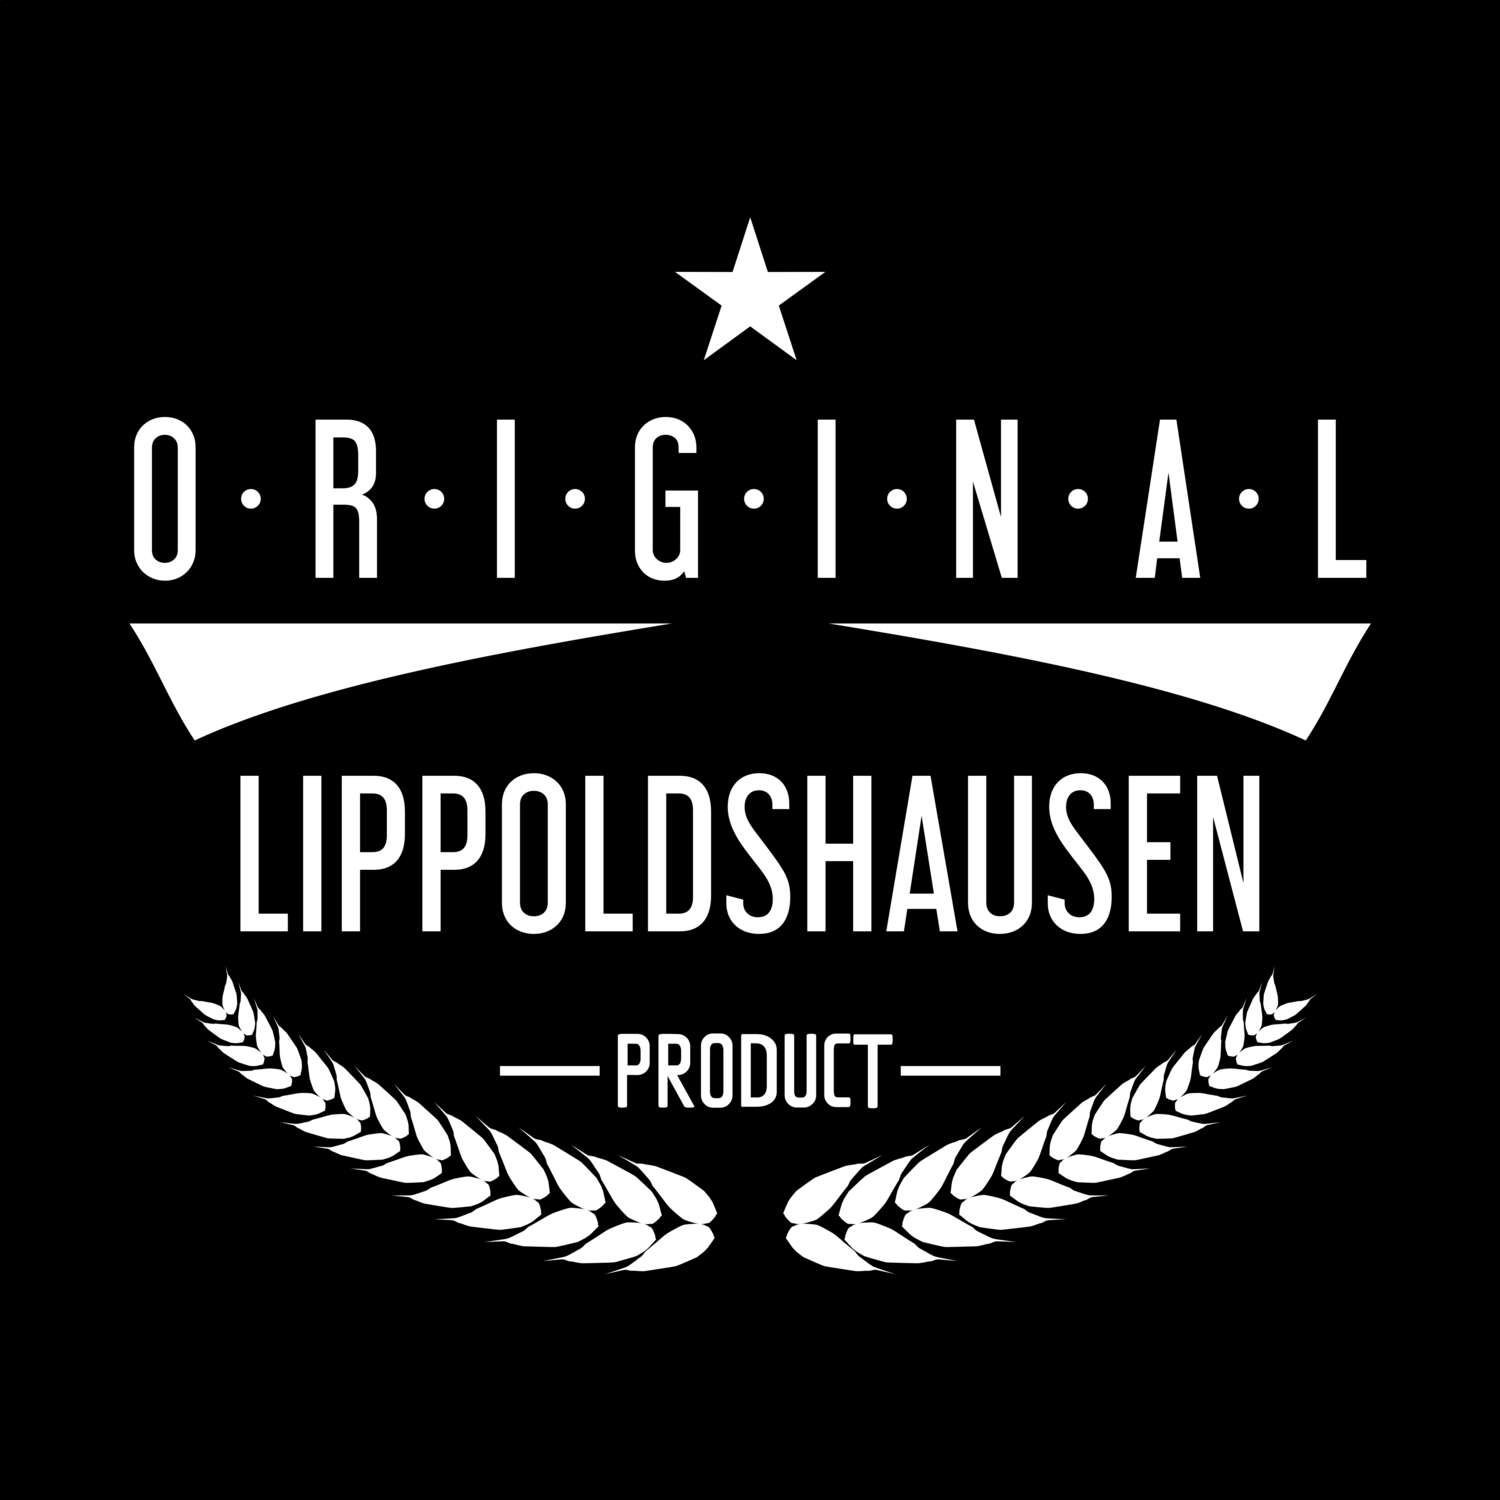 Lippoldshausen T-Shirt »Original Product«